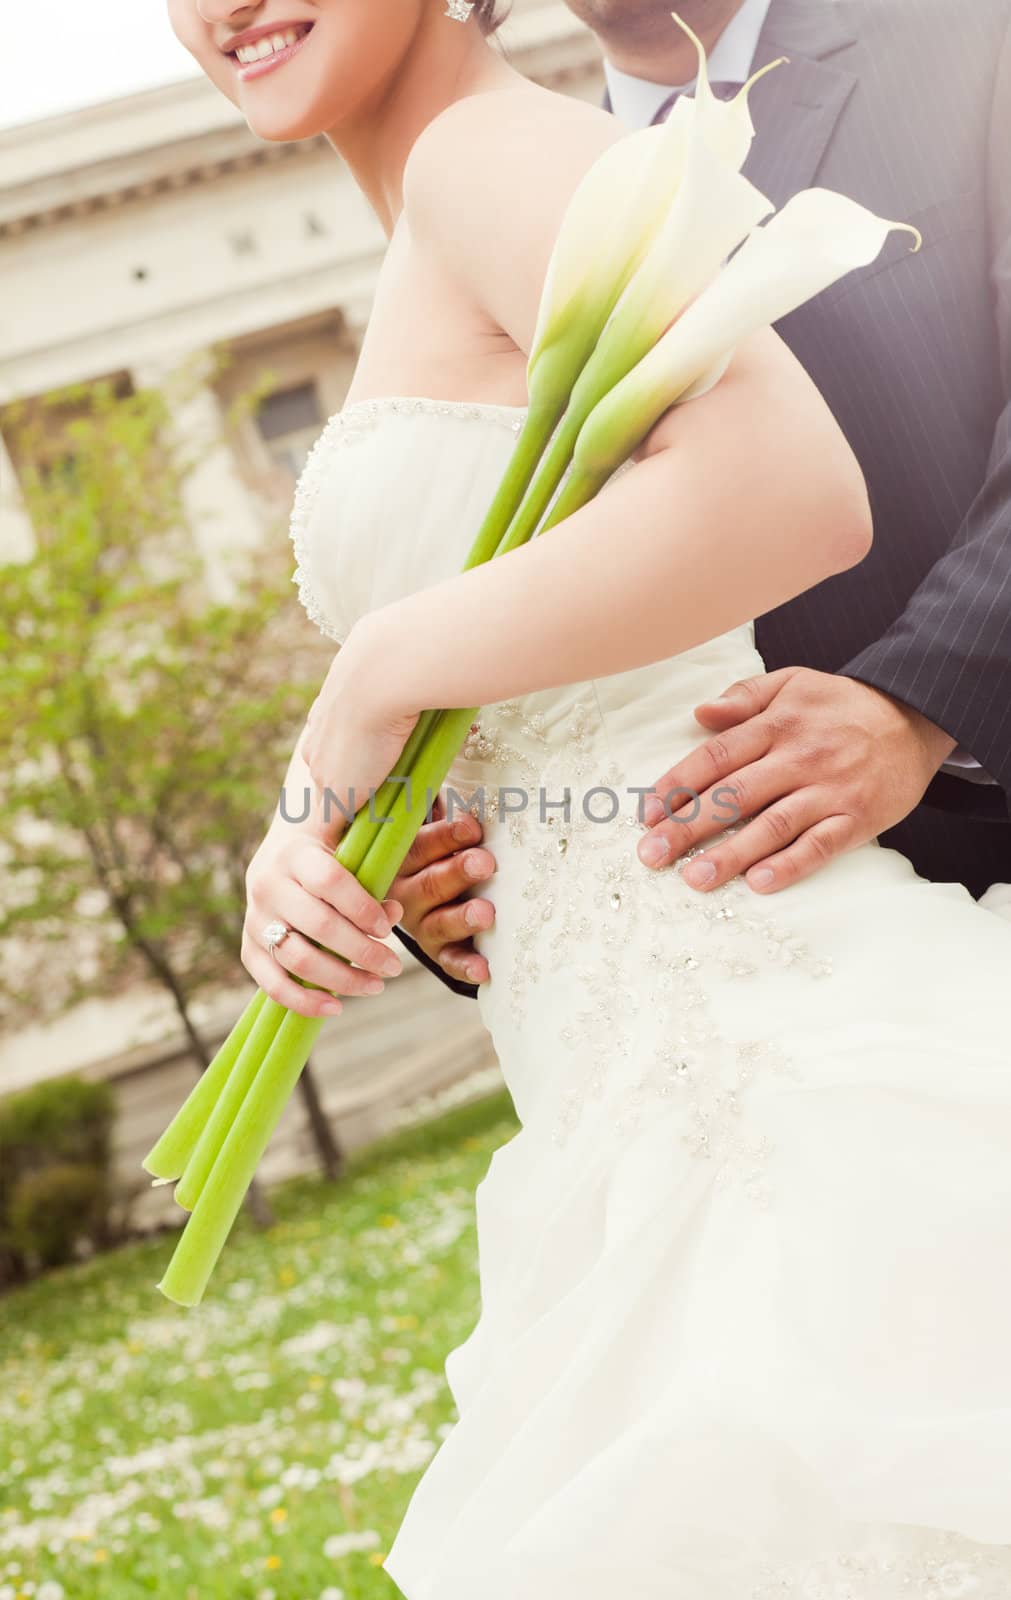 Wedding couple embracing by vilevi